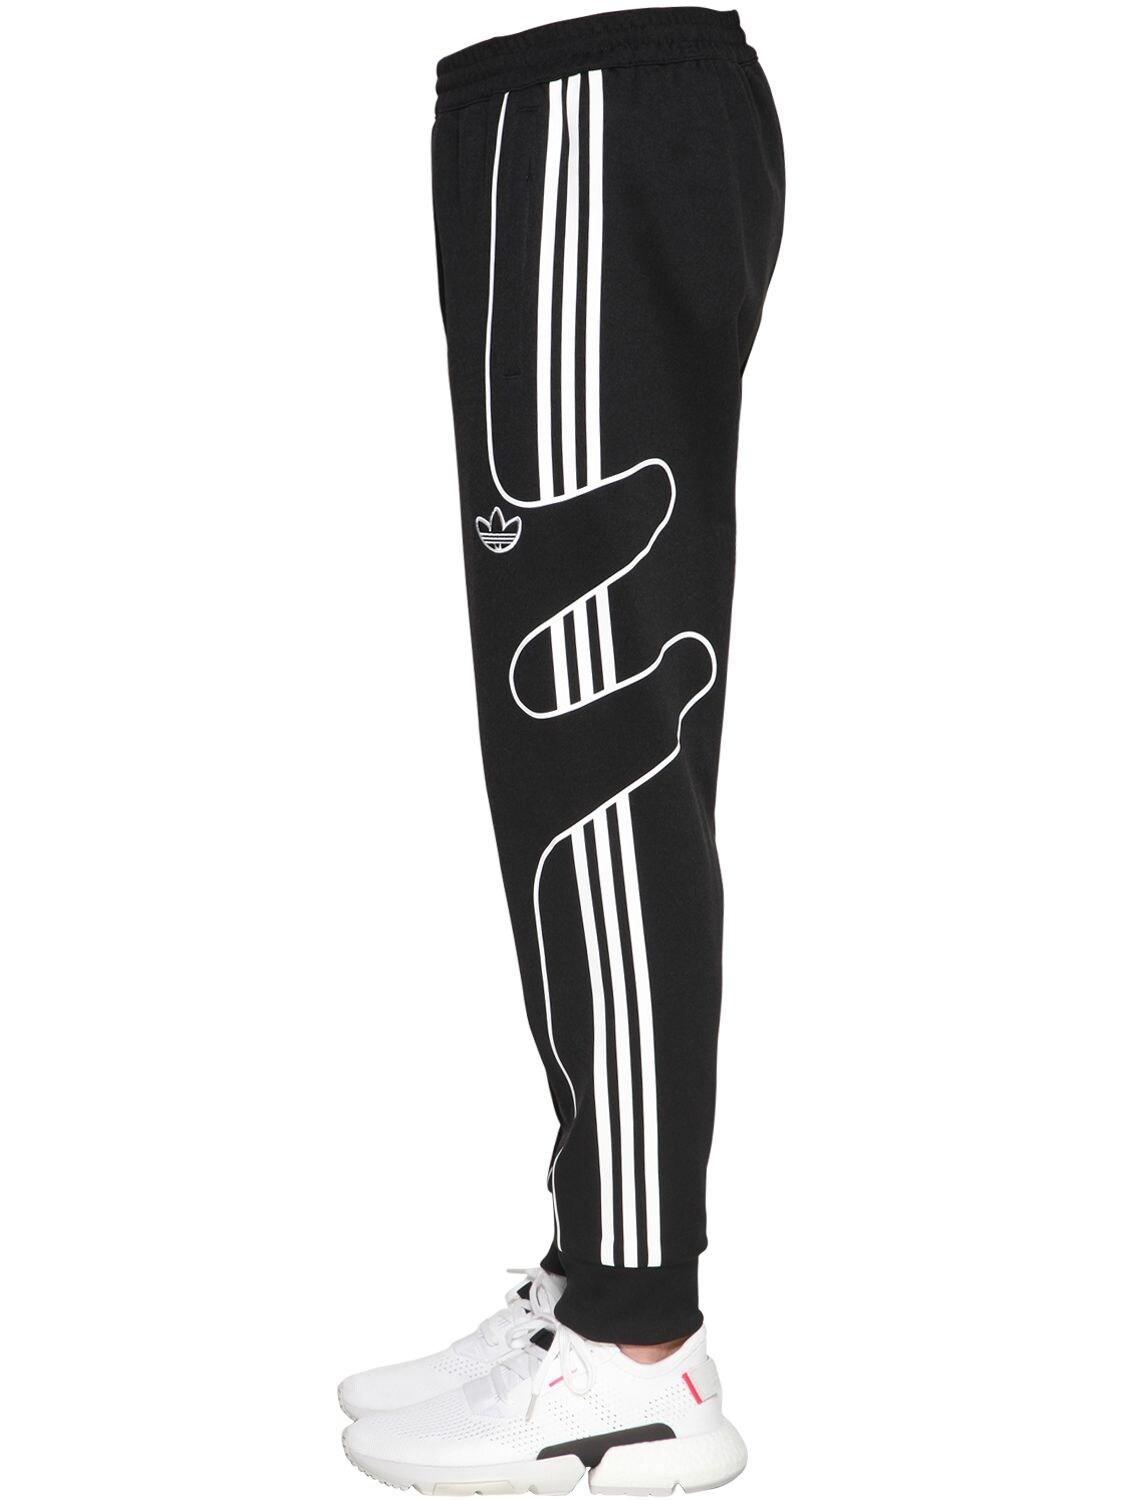 adidas Originals Fstrike Tp Jersey Trousers in Black for Men - Lyst